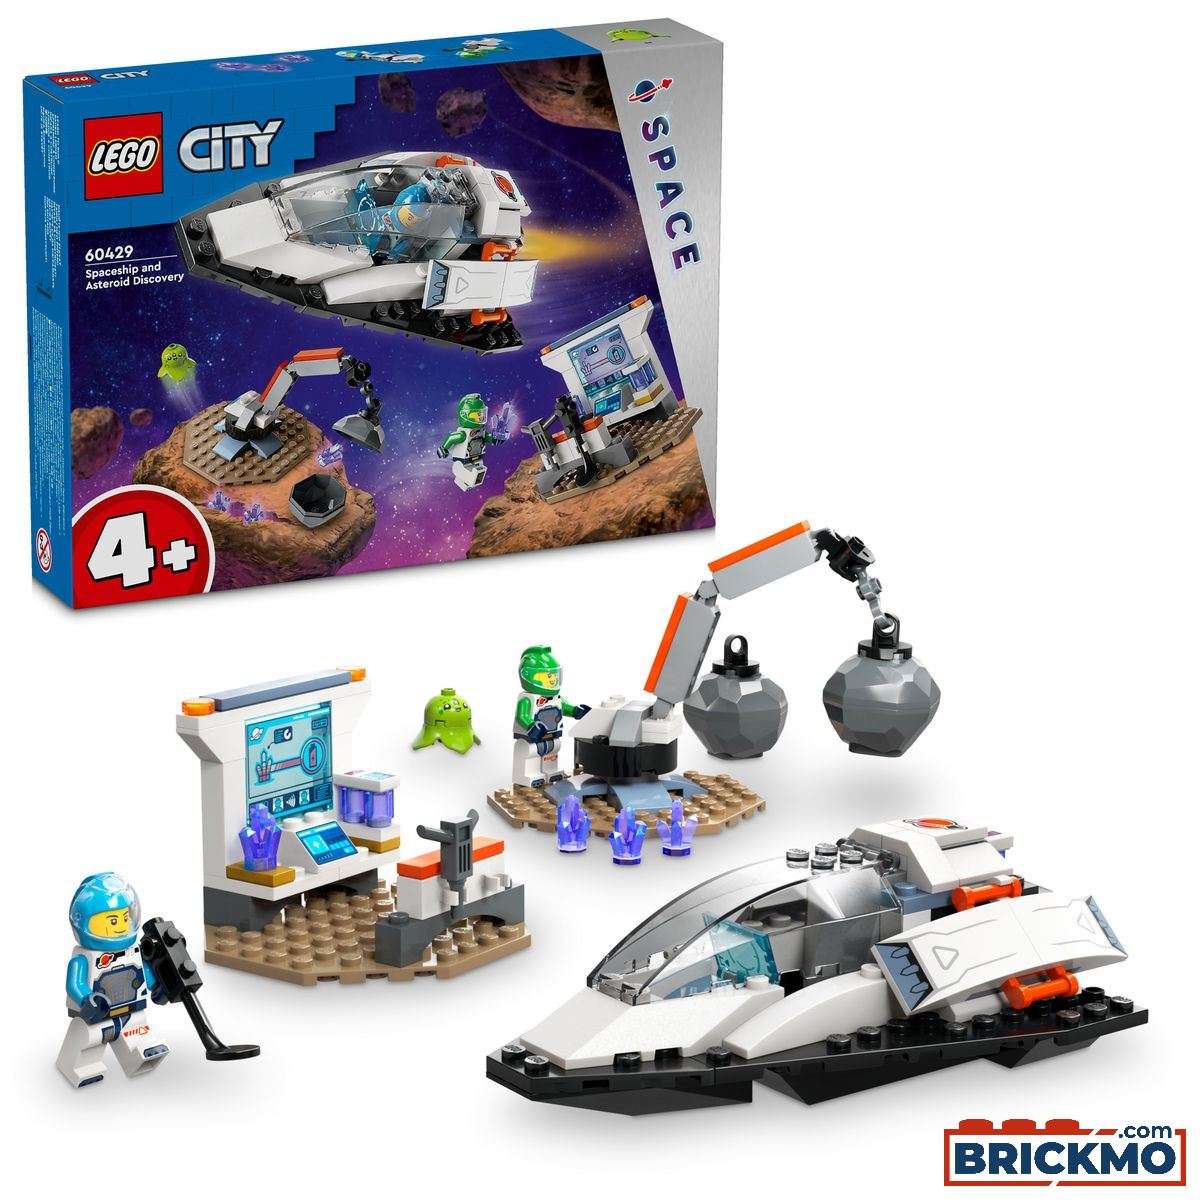 LEGO City 60429 Rumskib og asteroideforskning 60429